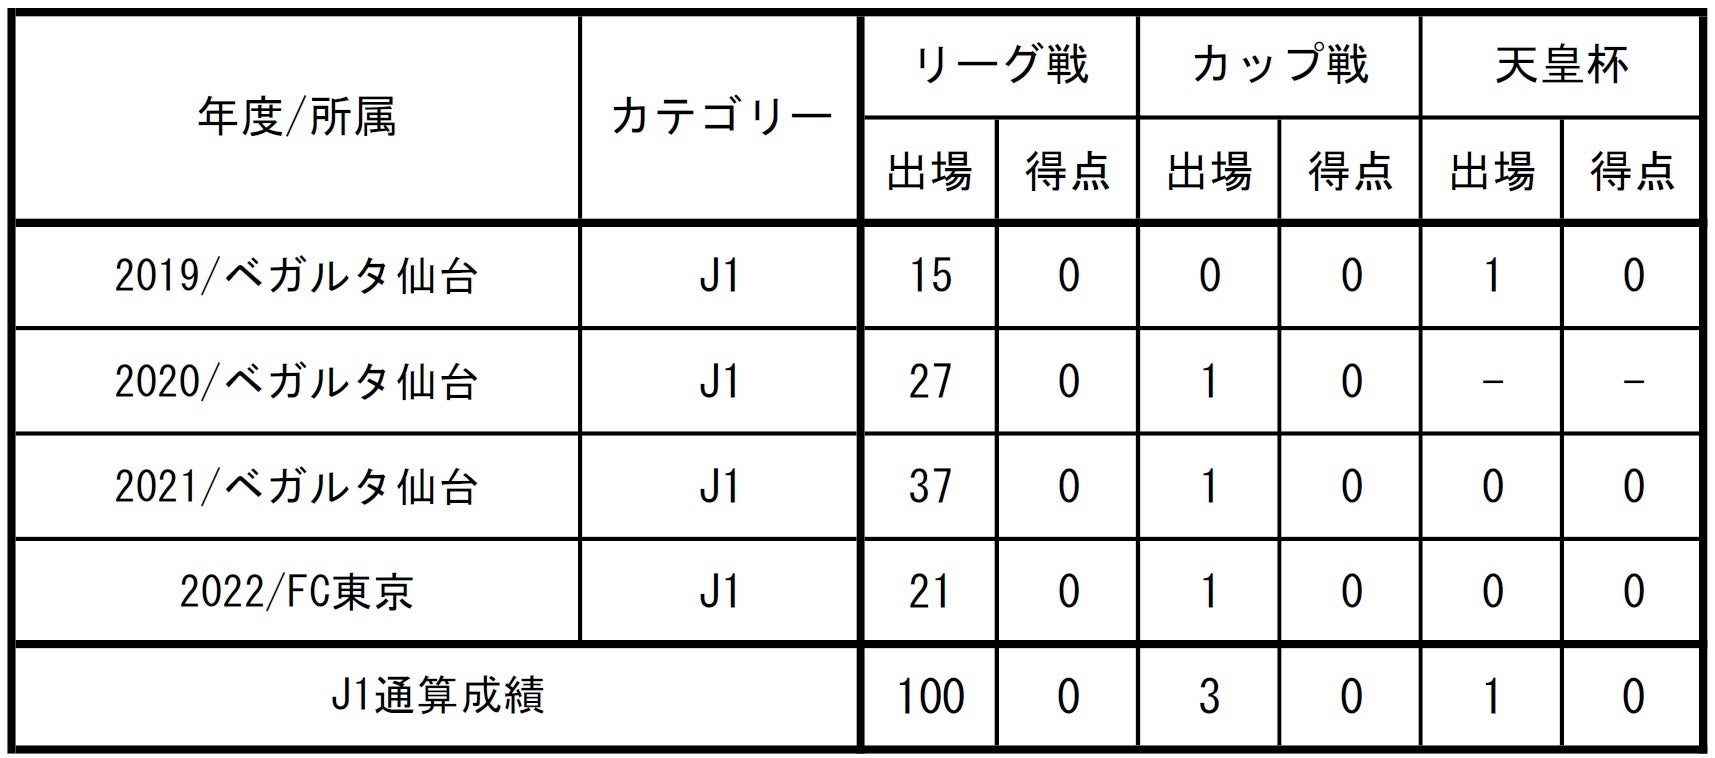 【FC東京】長友佑都選手 J1リーグ戦通算100試合出場達成のお知らせ